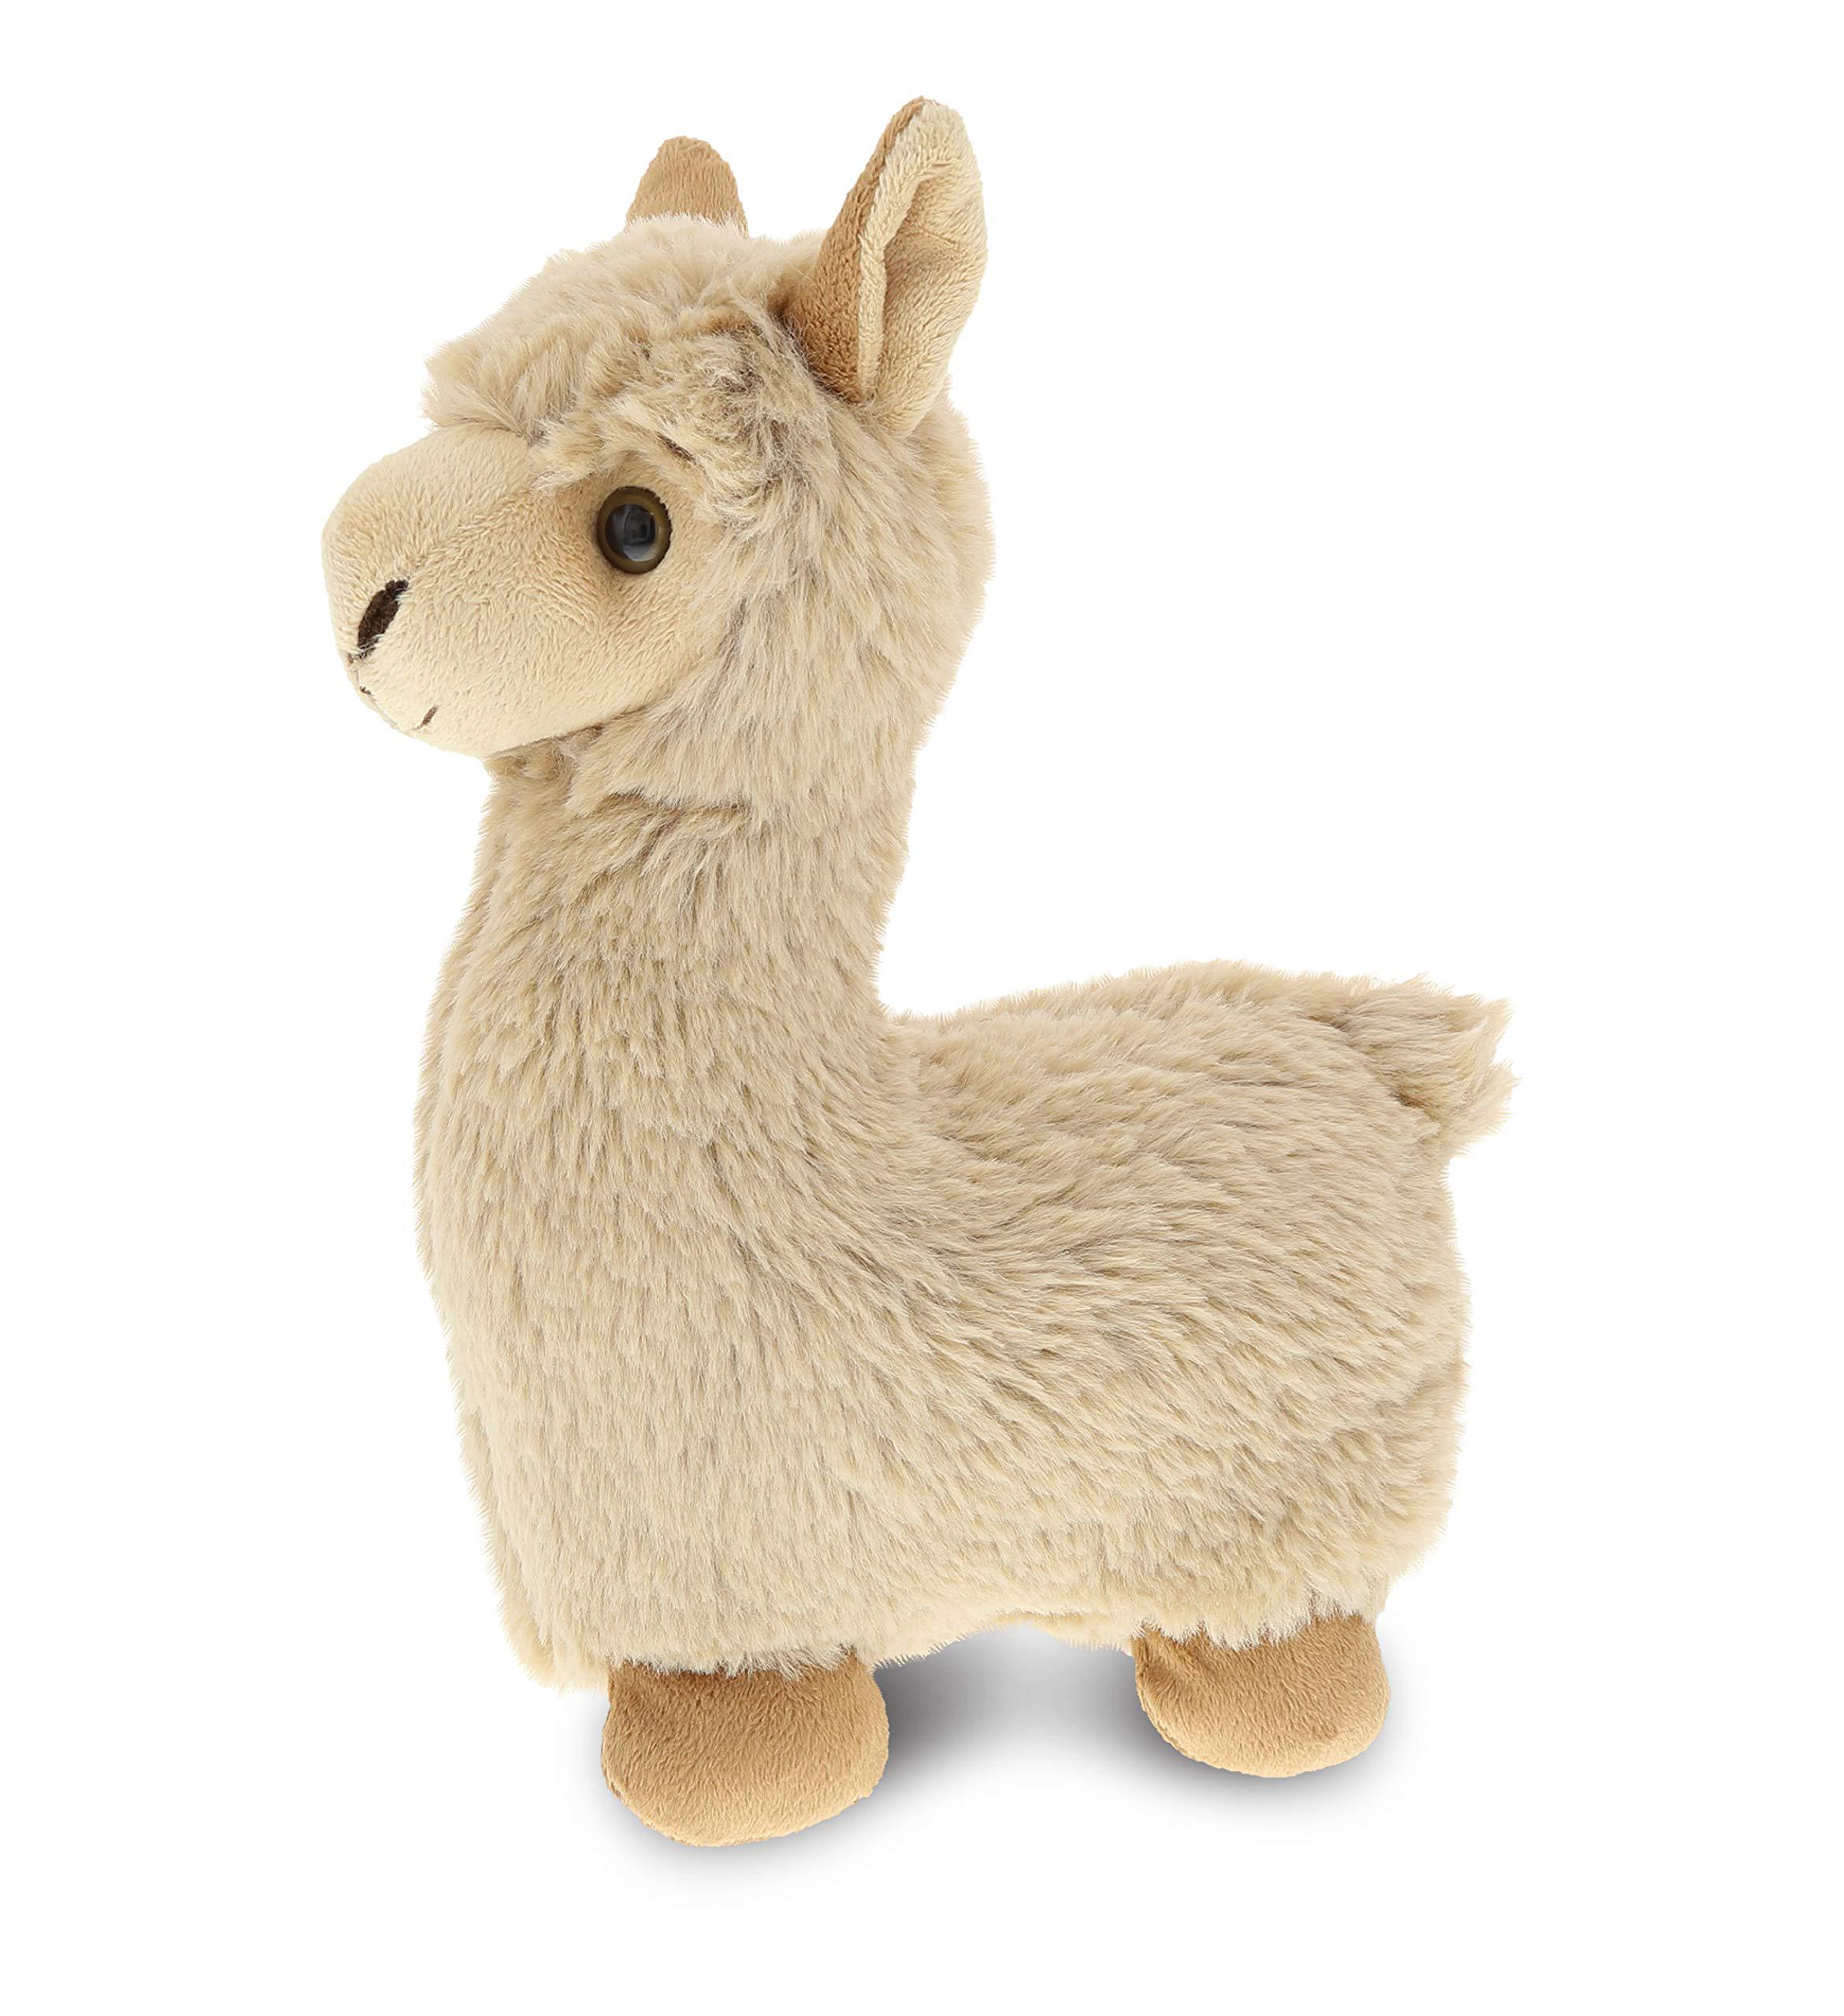 dollibu personalized beige llama stuffed animal plush toy - huggable cuddle soft plush llama gift, cute stuffed animals for g